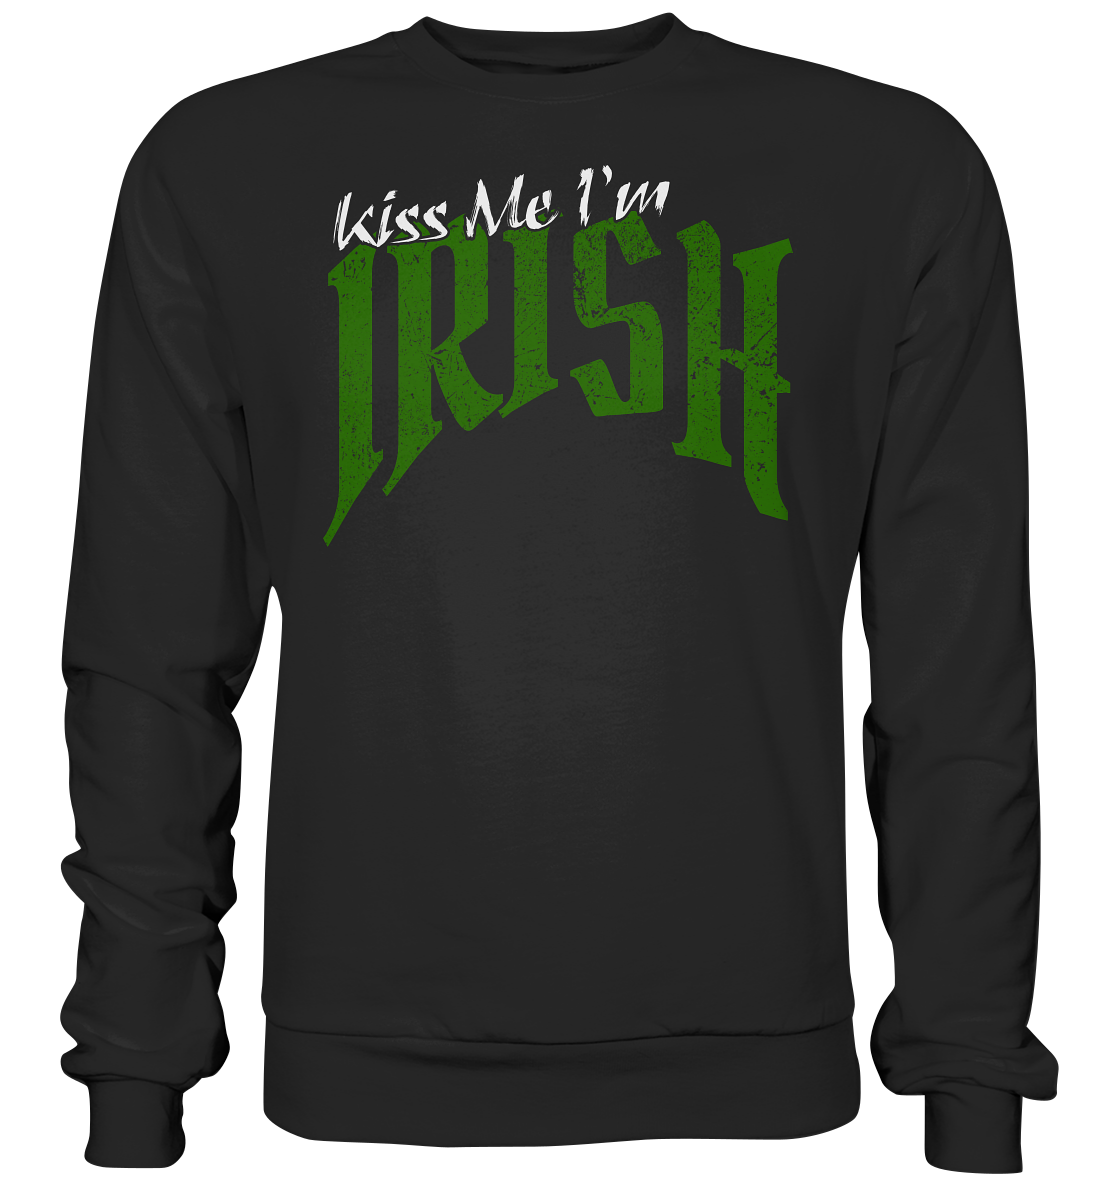 Kiss Me "I'm Irish" - Basic Sweatshirt